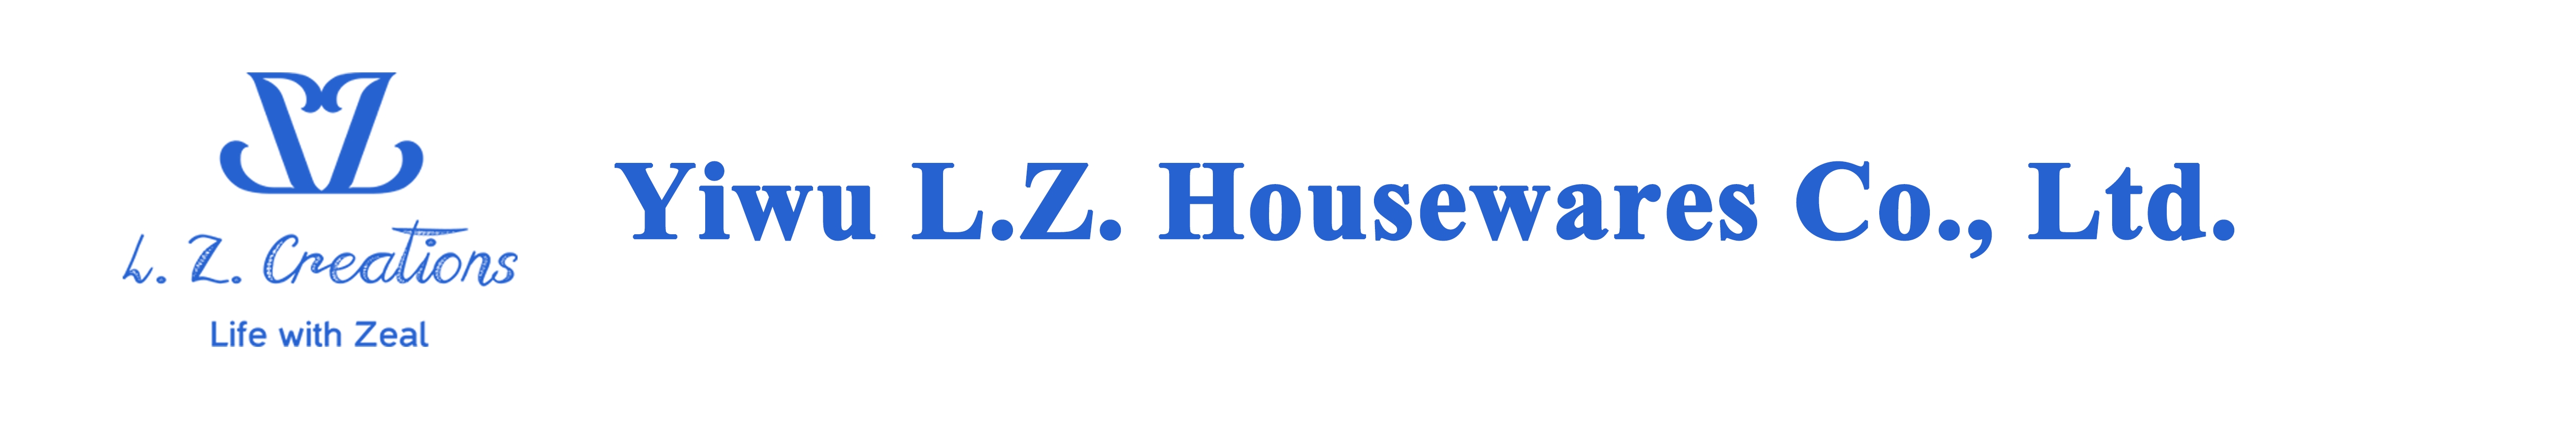 Yiwu L.Z. Housewares Co., Ltd.